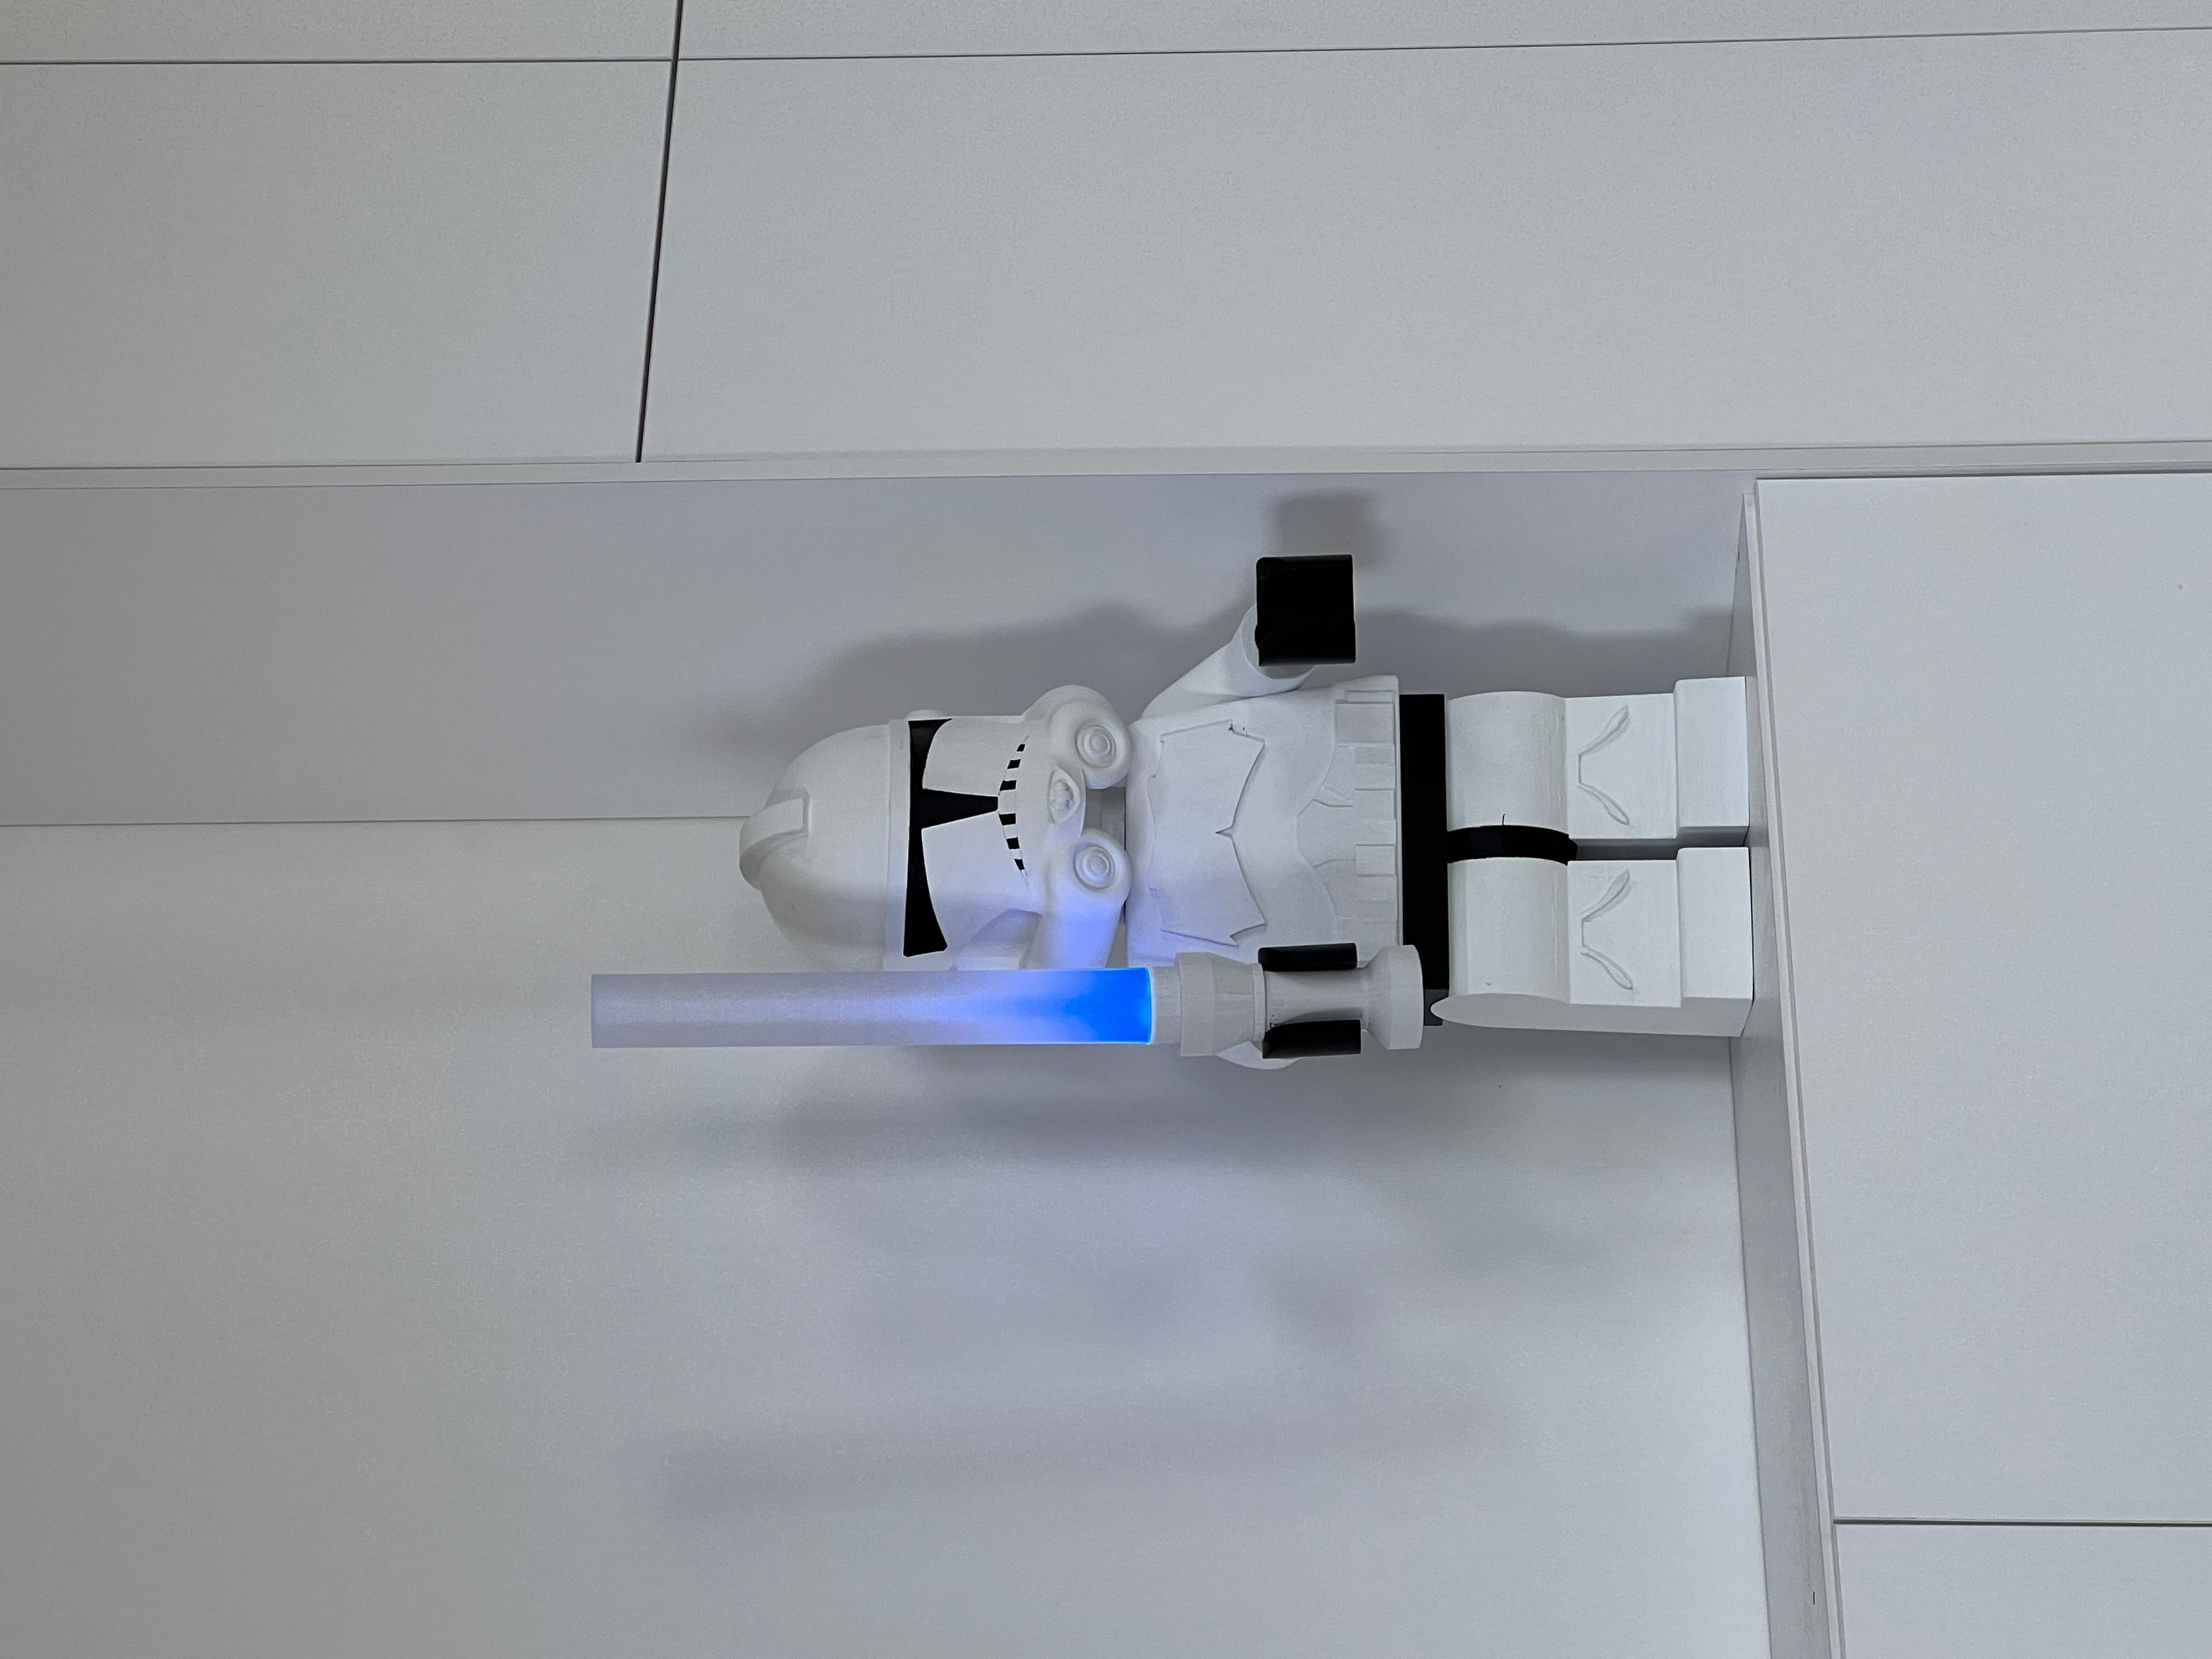 Stormtrooper Lego 3D Printable  - 1500% scaled - 3d model